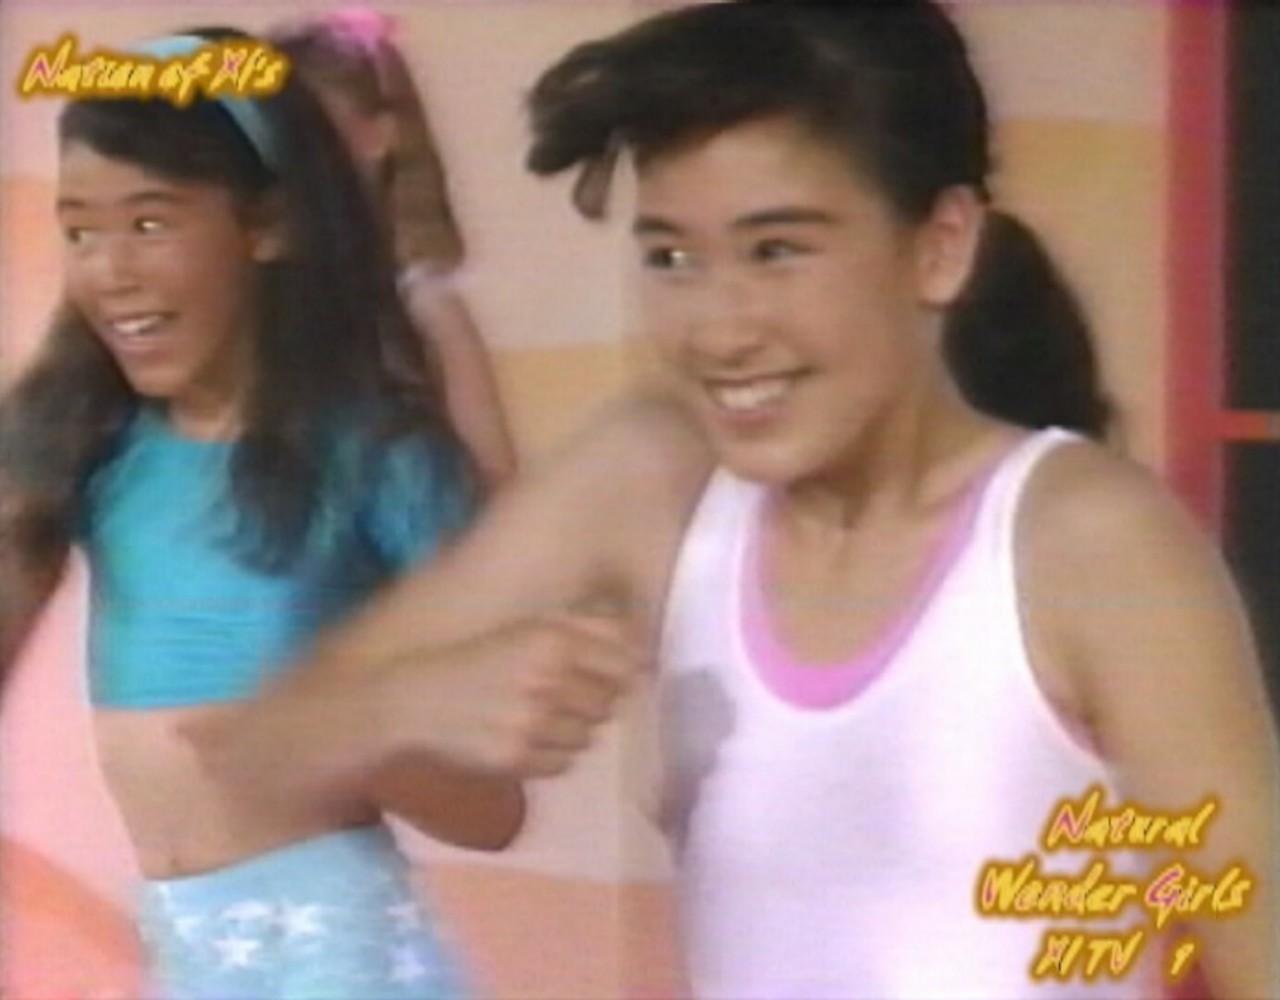 "SXS Sorority . . . We Just Taste Better!" ITN's Natural Wonder Girls Dance Workout! Featuring Lisa Mariano!  